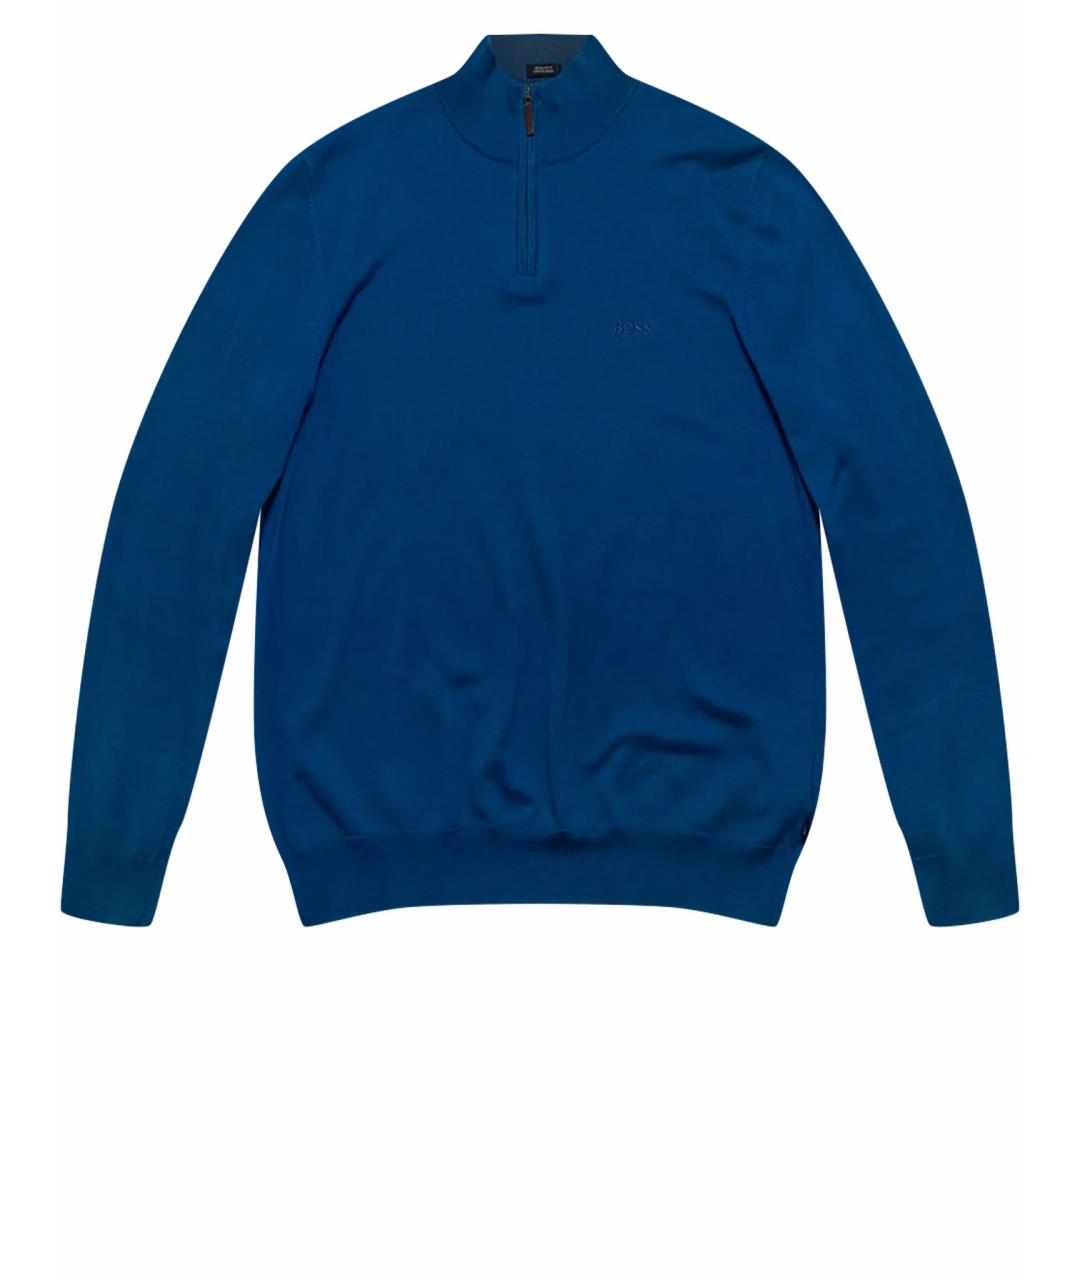 HUGO BOSS Синий шерстяной джемпер / свитер, фото 1